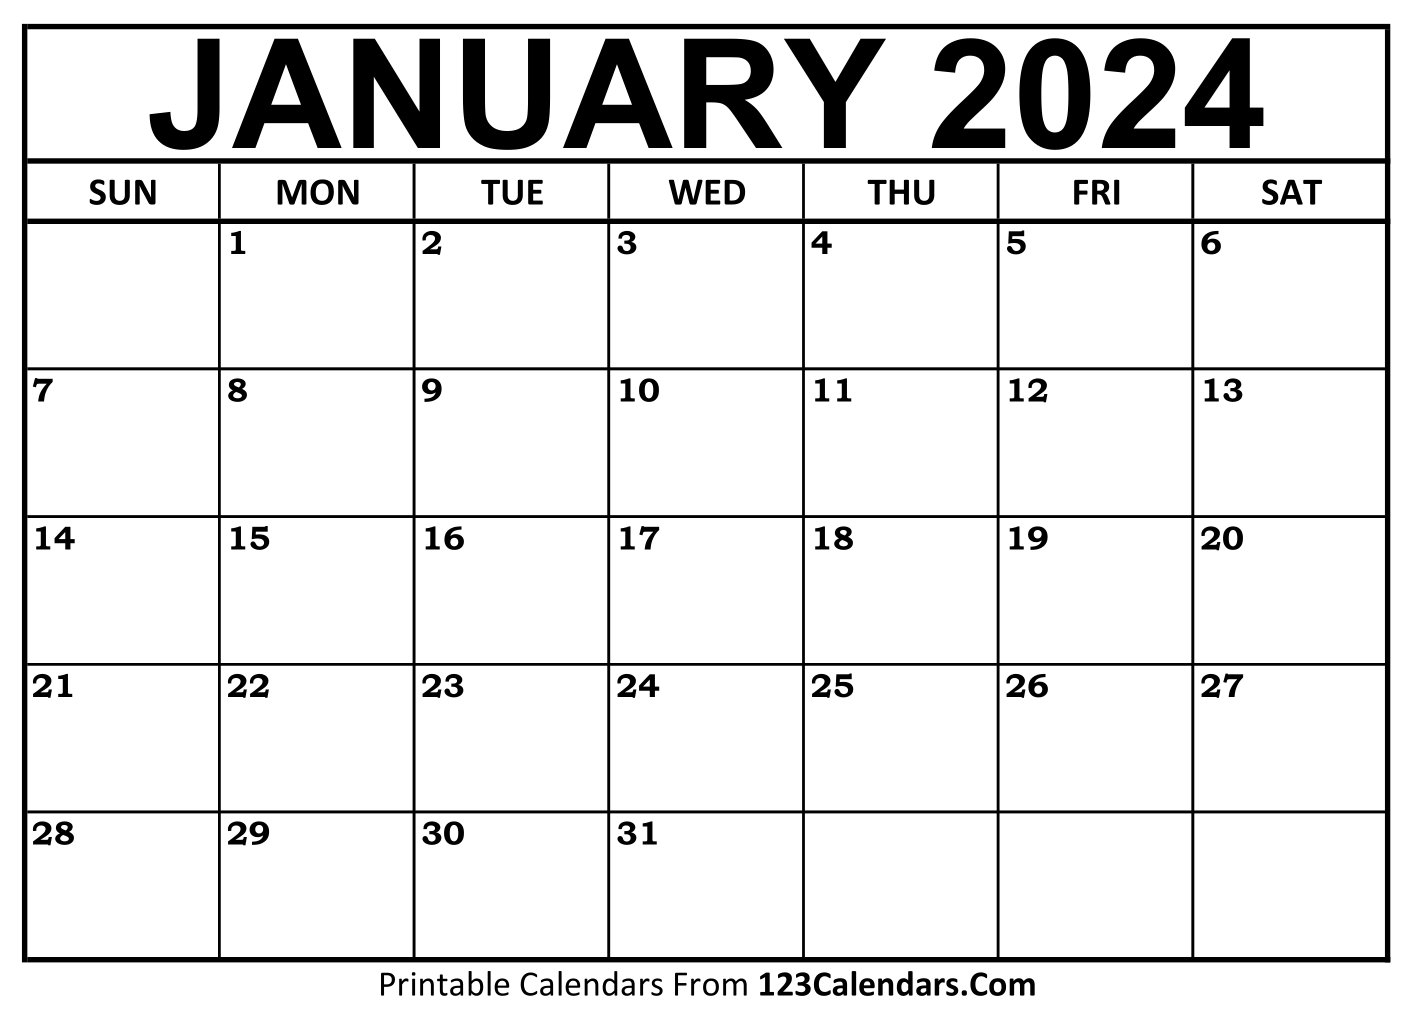 Printable January 2024 Calendar Templates - 123Calendars for Jan 2024 Calendar Printable